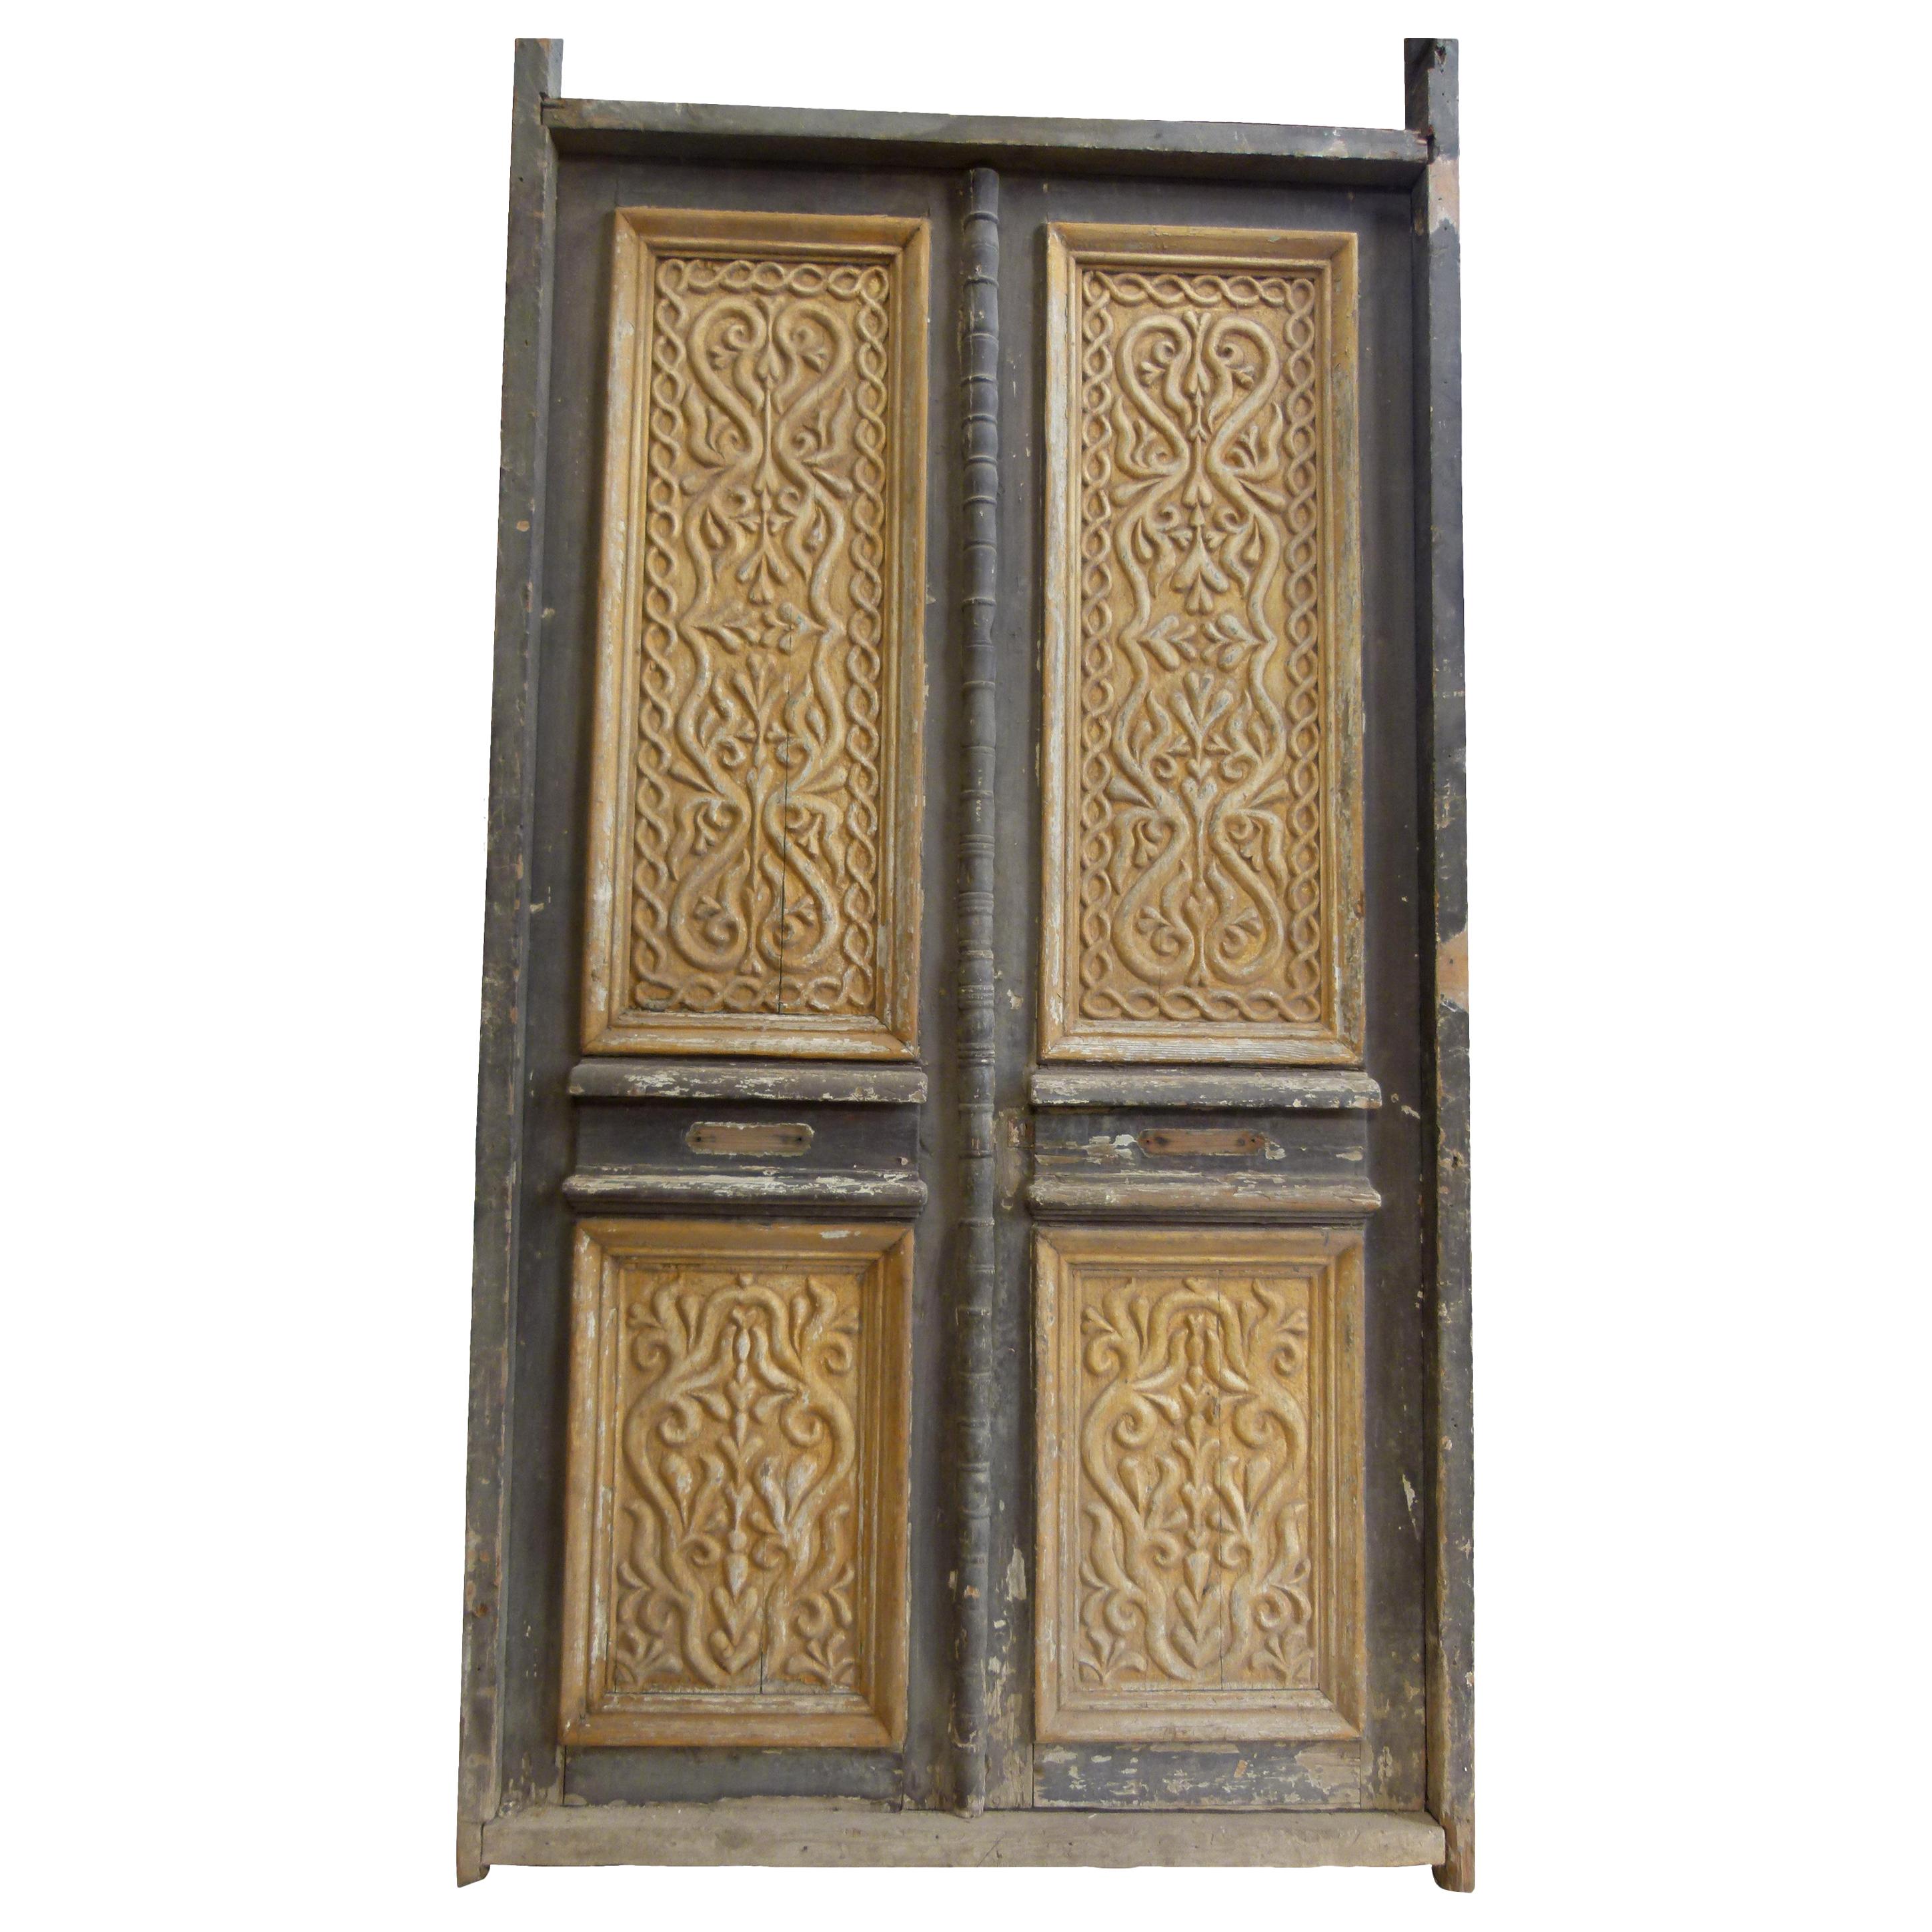 19th Century Double Front Door in Art Nouveau Style, Spain